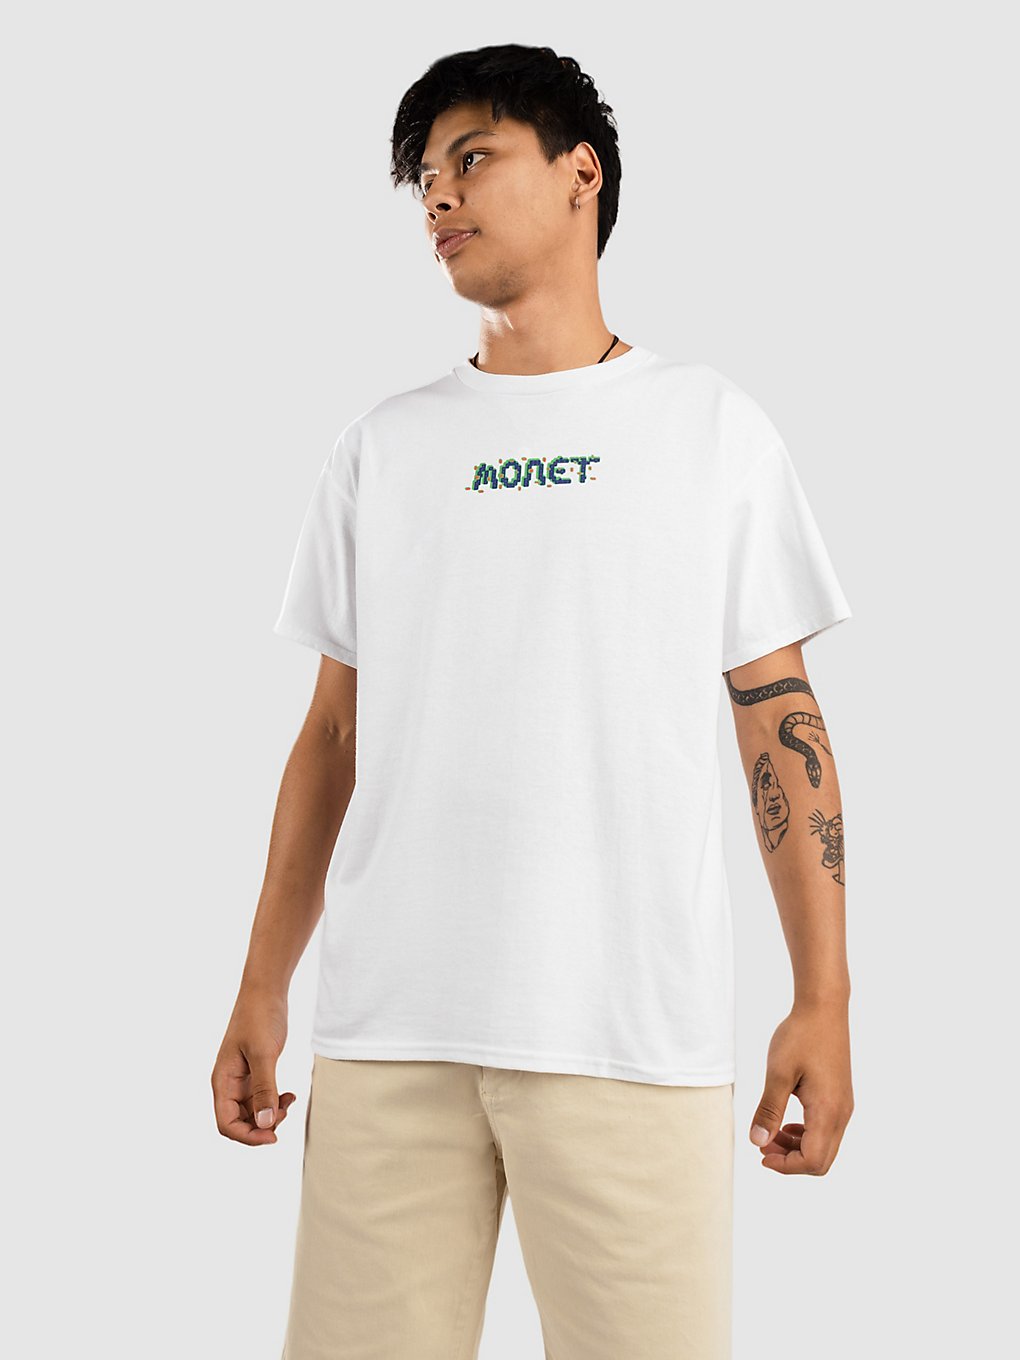 Monet Skateboards Bit Party T-Shirt white kaufen